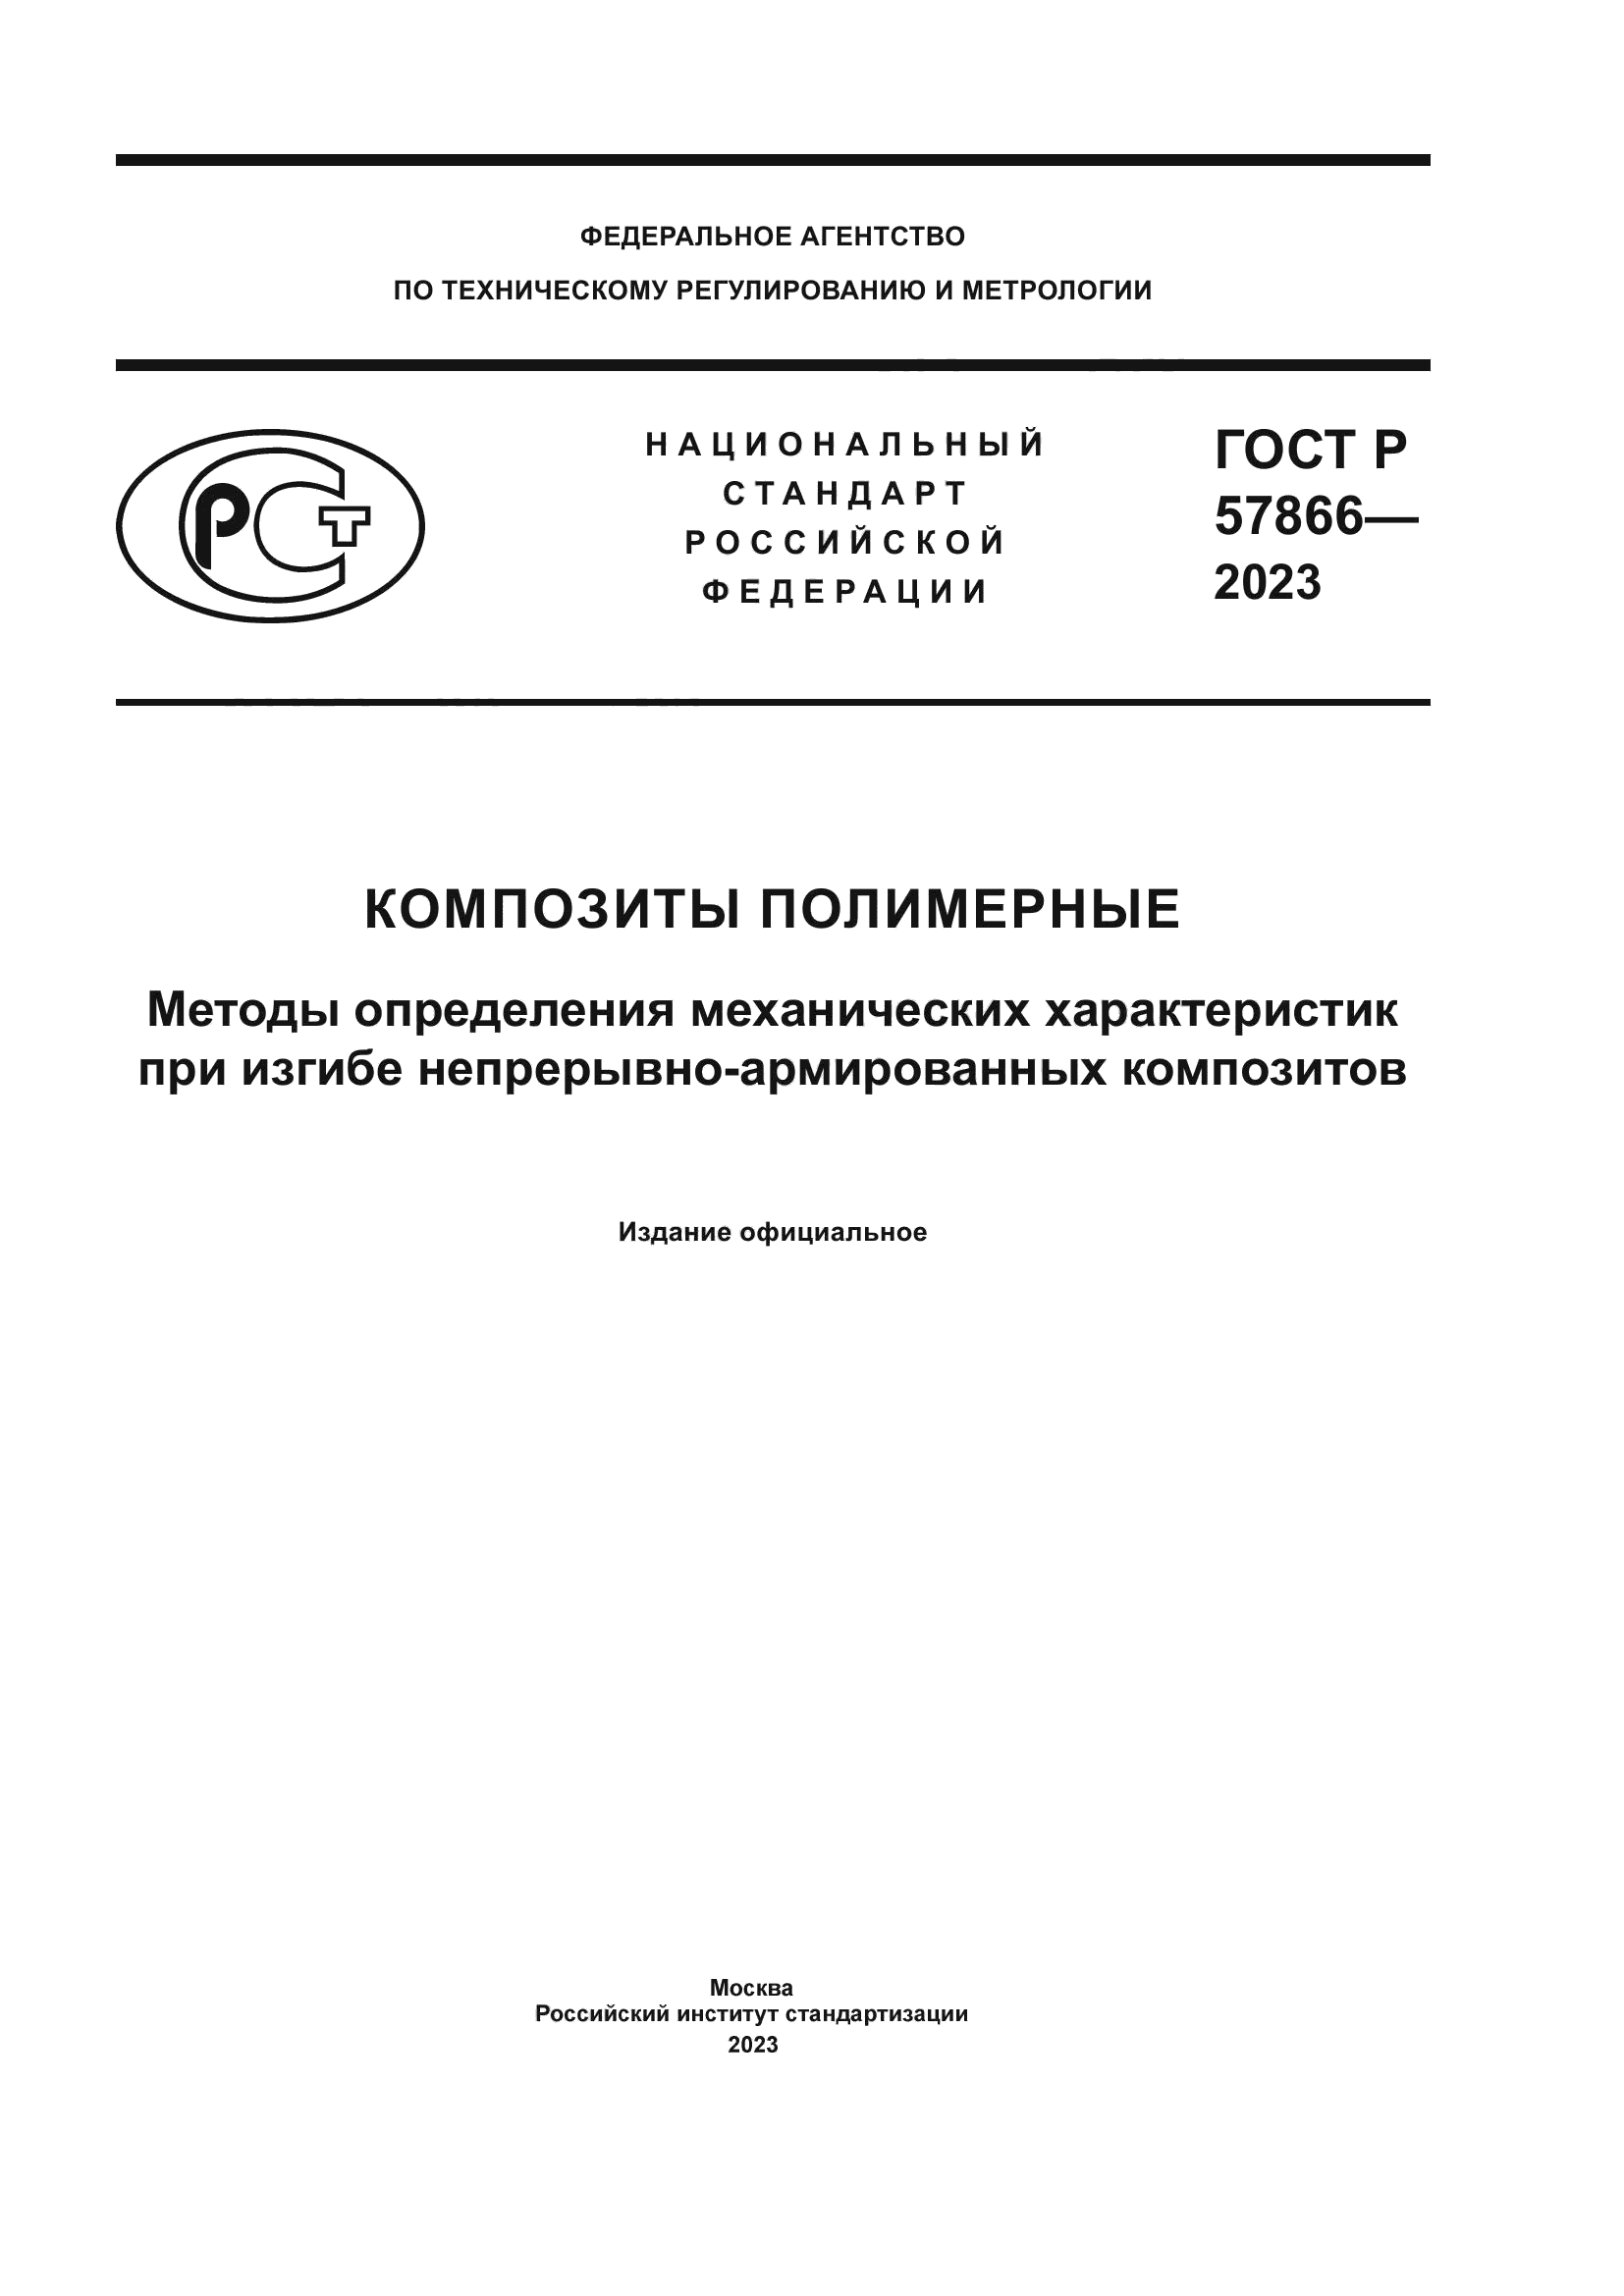 ГОСТ Р 57866-2023